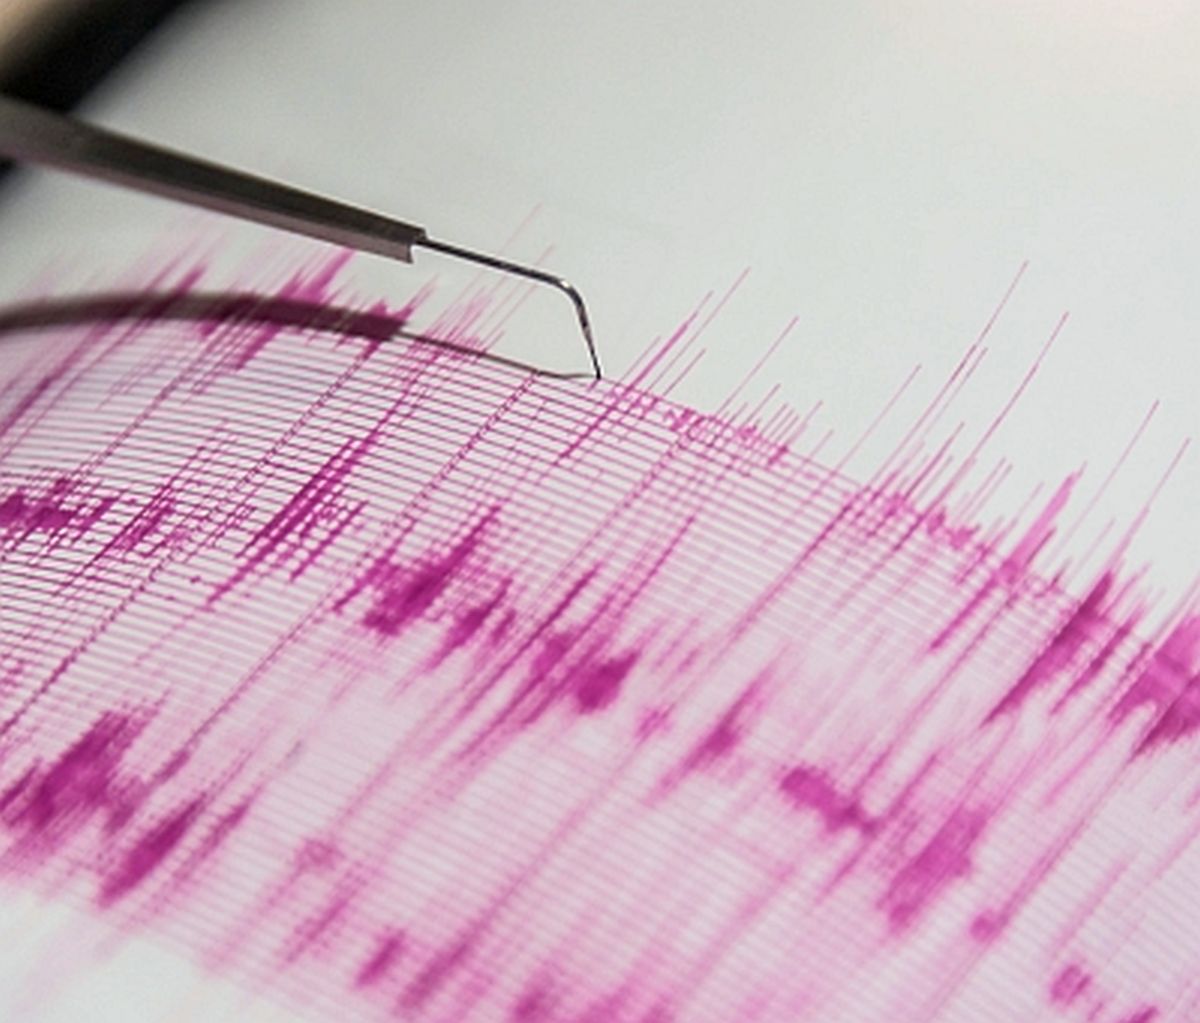 5.4-magnitude quake hits J-K; tremors in north India